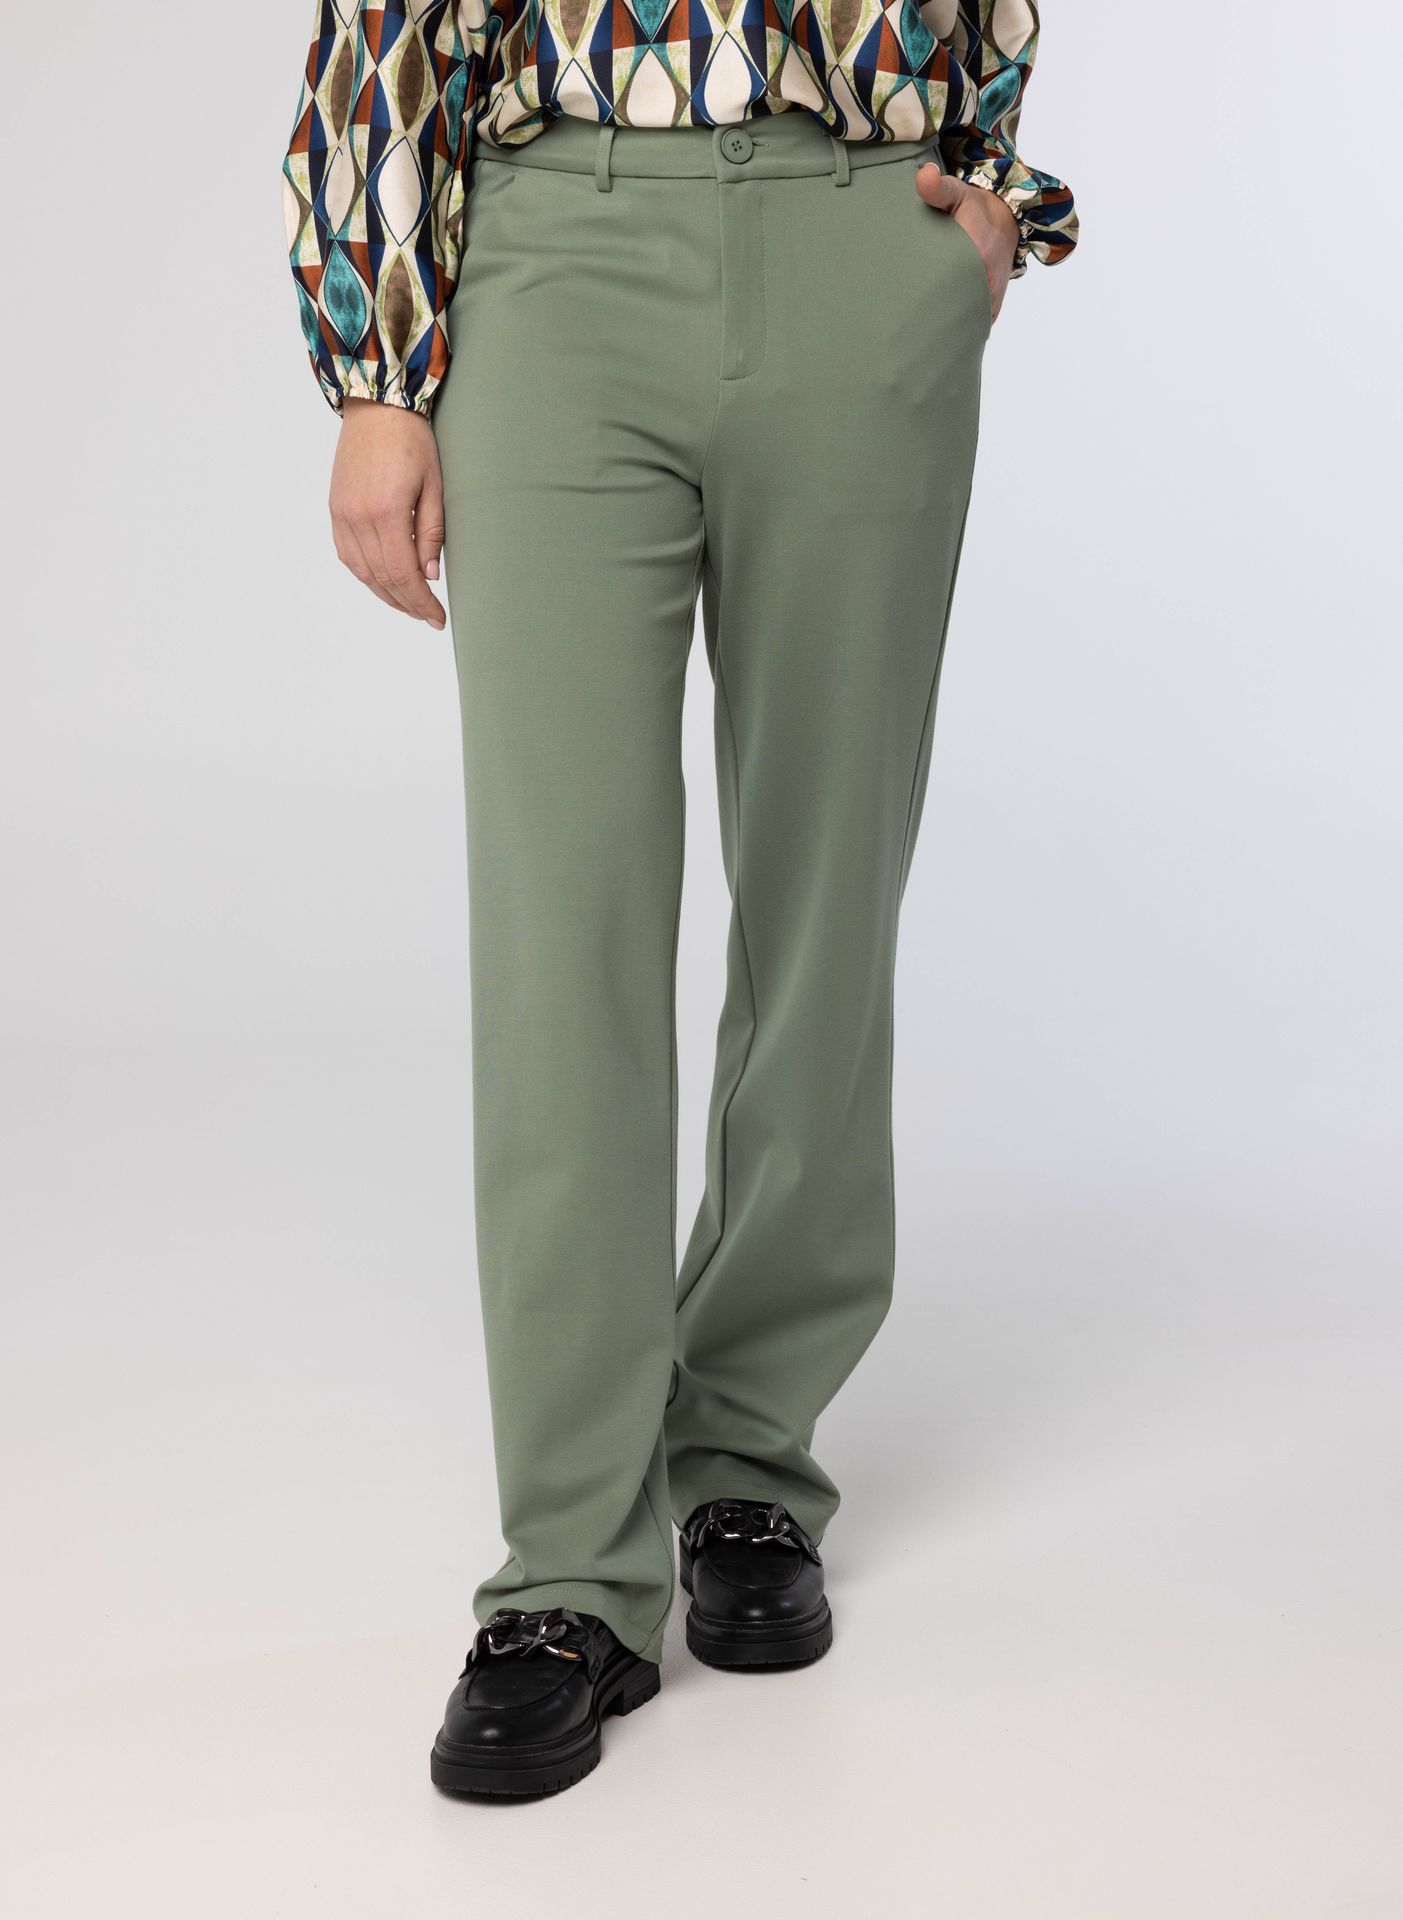 Norah Groene pantalon green/grey 213502-540